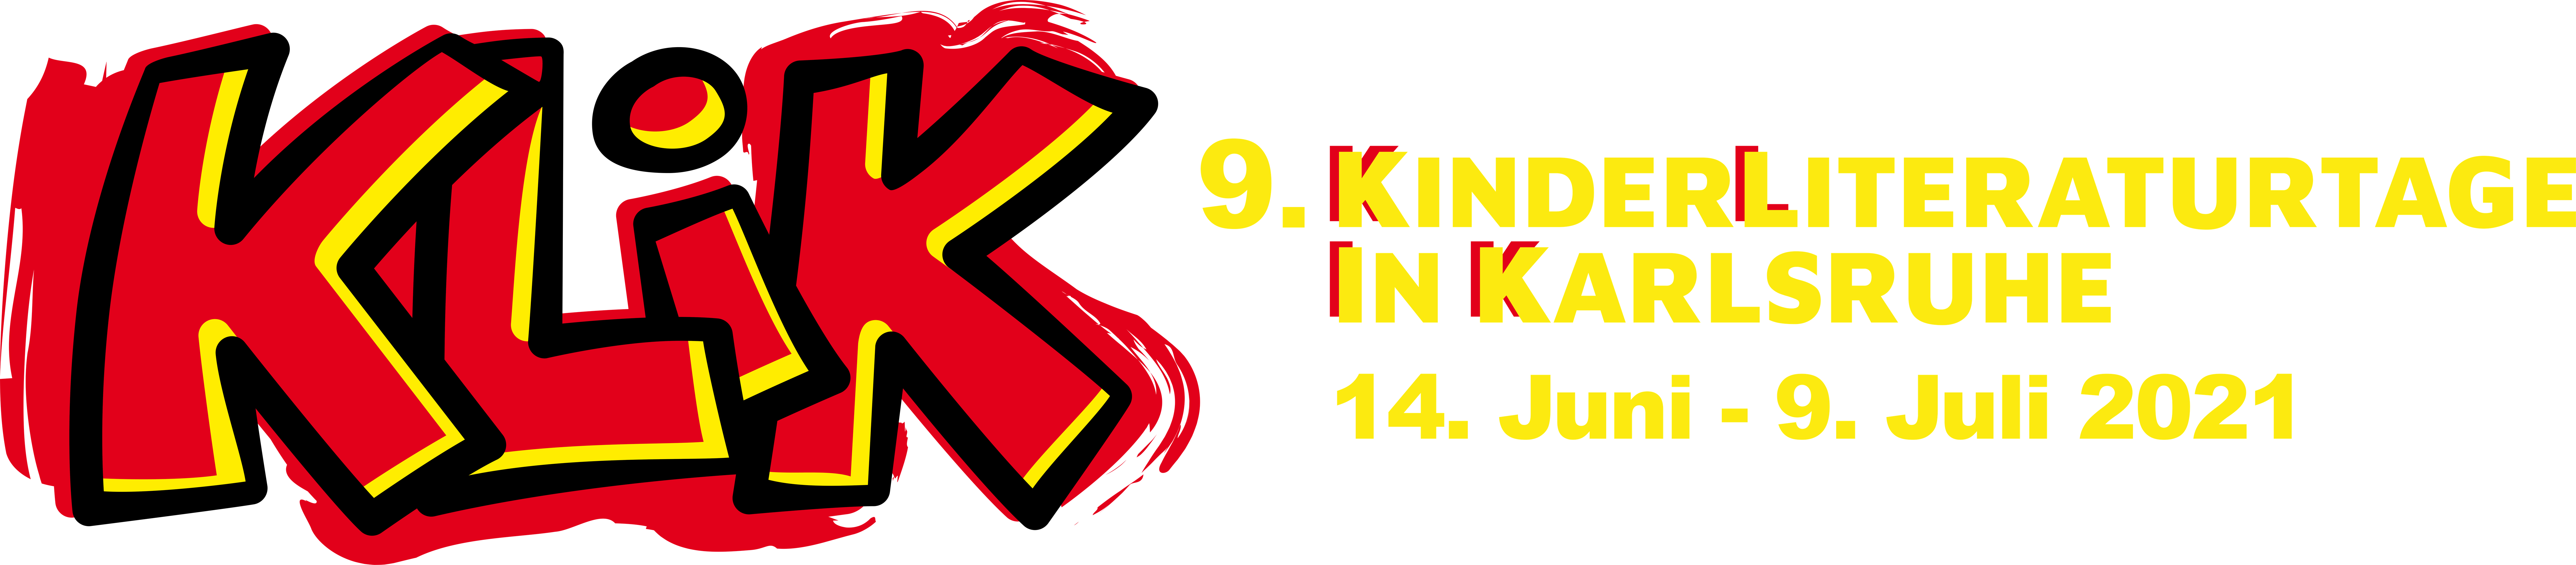 9. Kinderliteraturtage in Karlsruhe